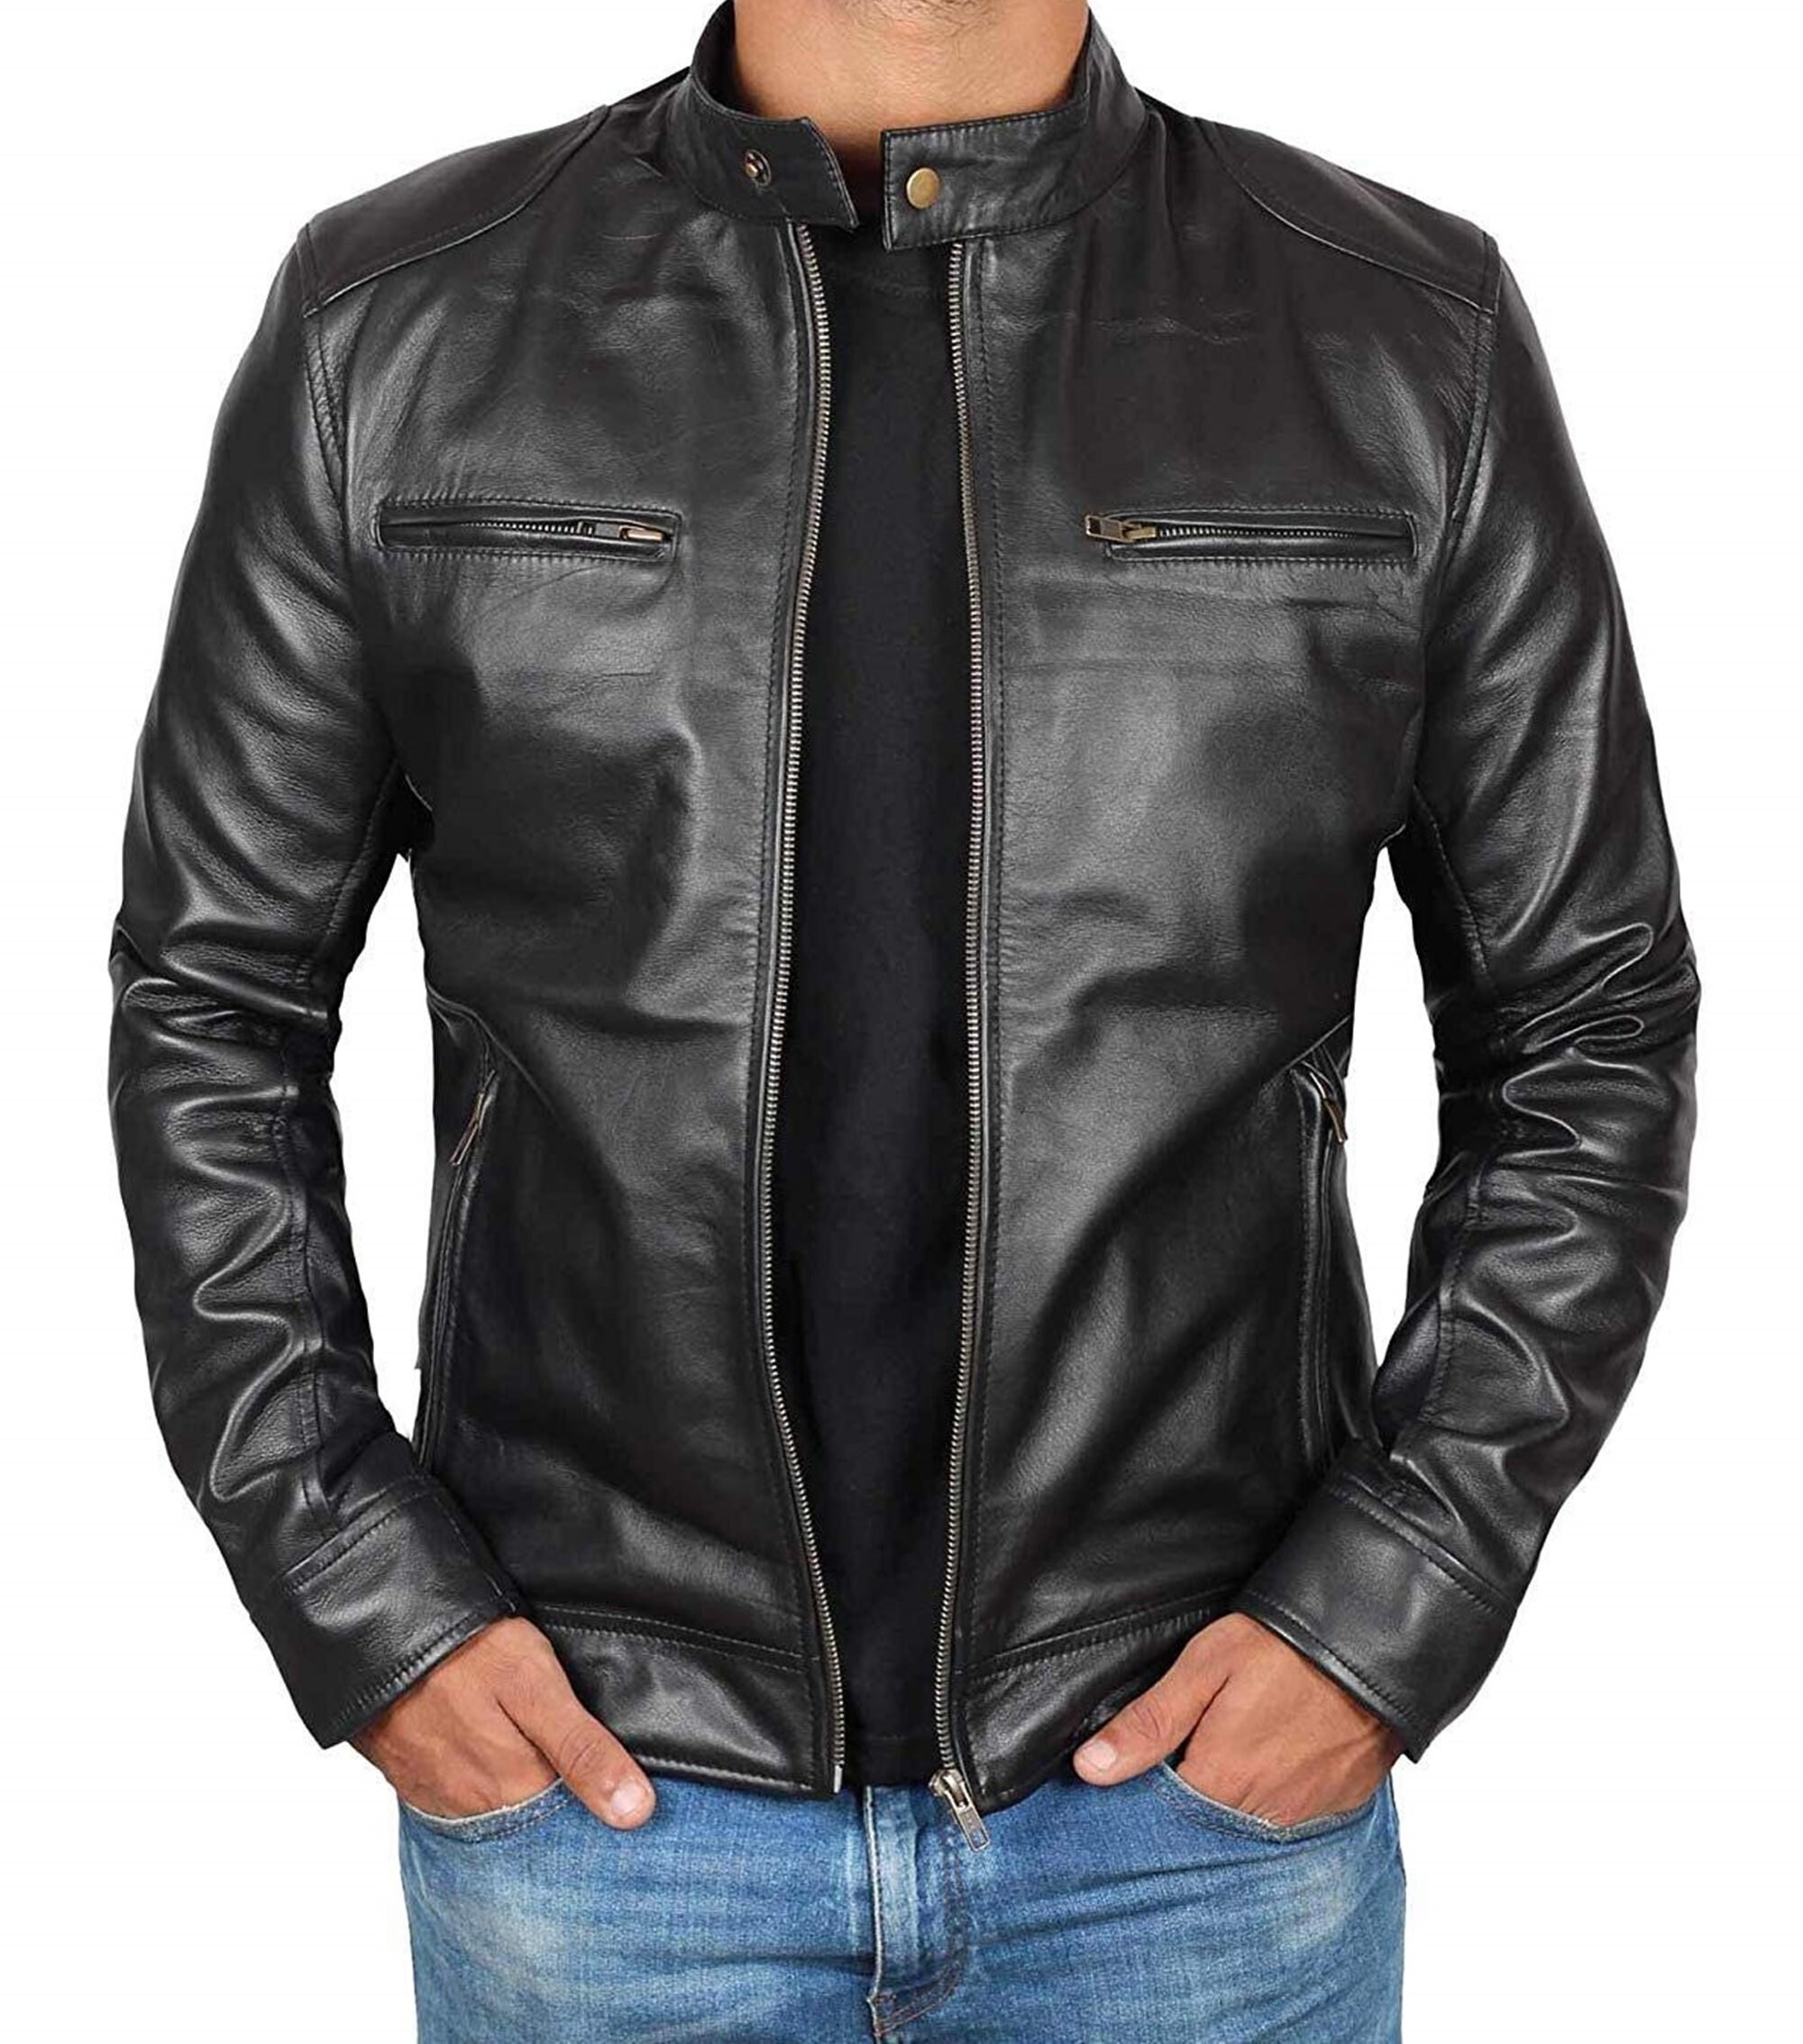 Mens Black Leather Jacket Leather Jacket For Mens | Etsy